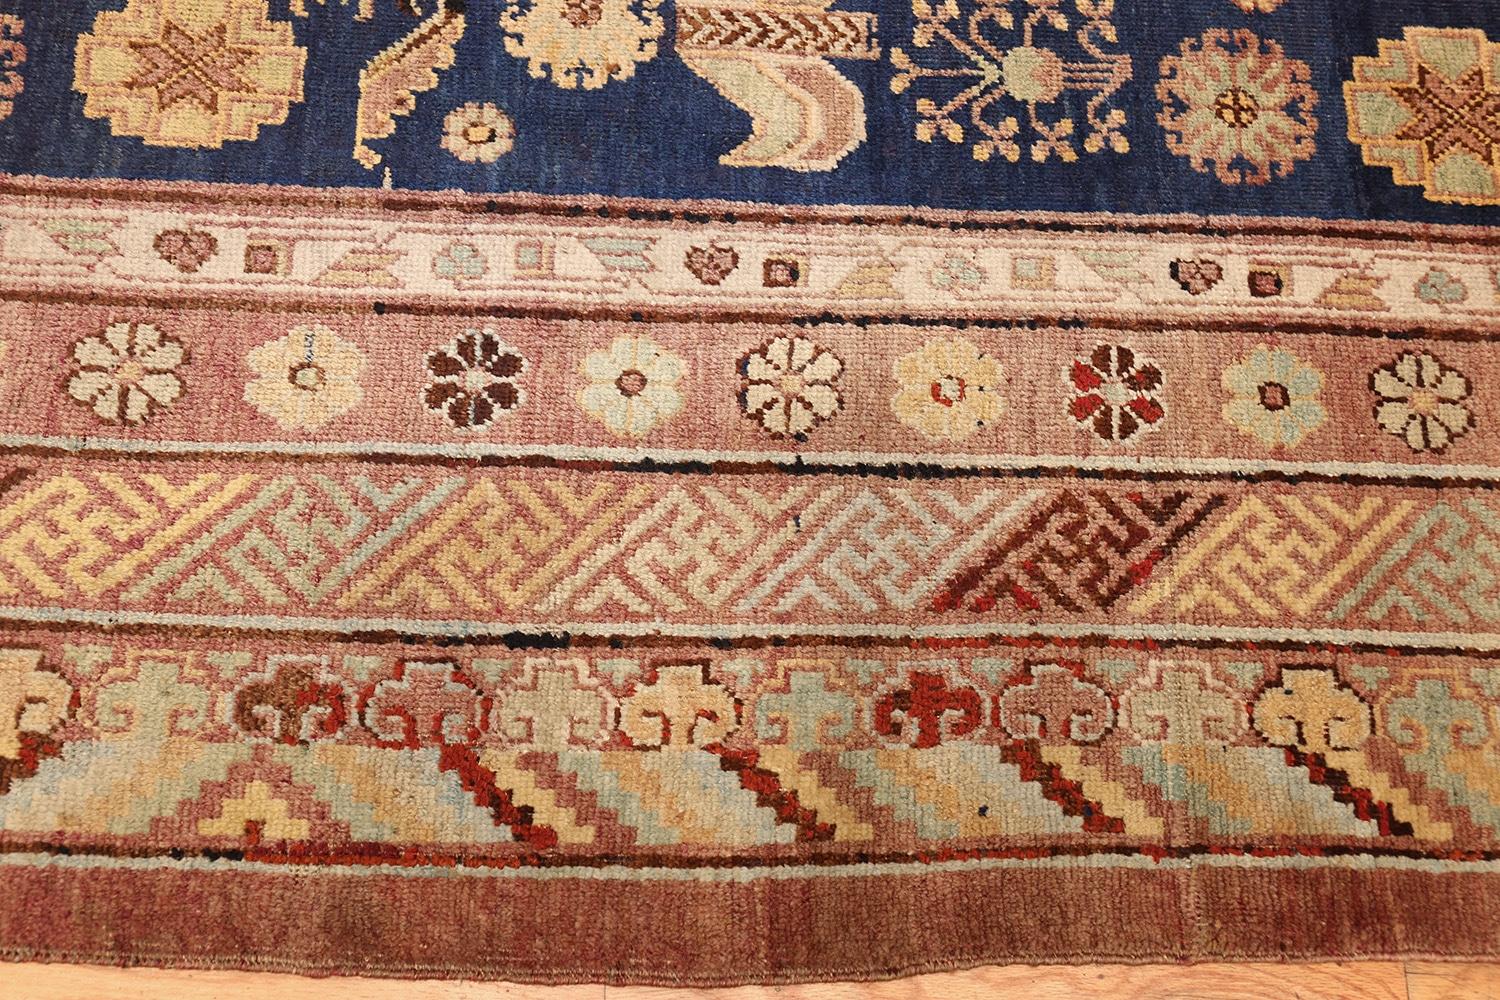 Antique Khotan rug, Country of Origin: East Turkestan, Persia, Circa date: 1920. Size: 5 ft 5 in x 11 ft (1.65 m x 3.35 m)

